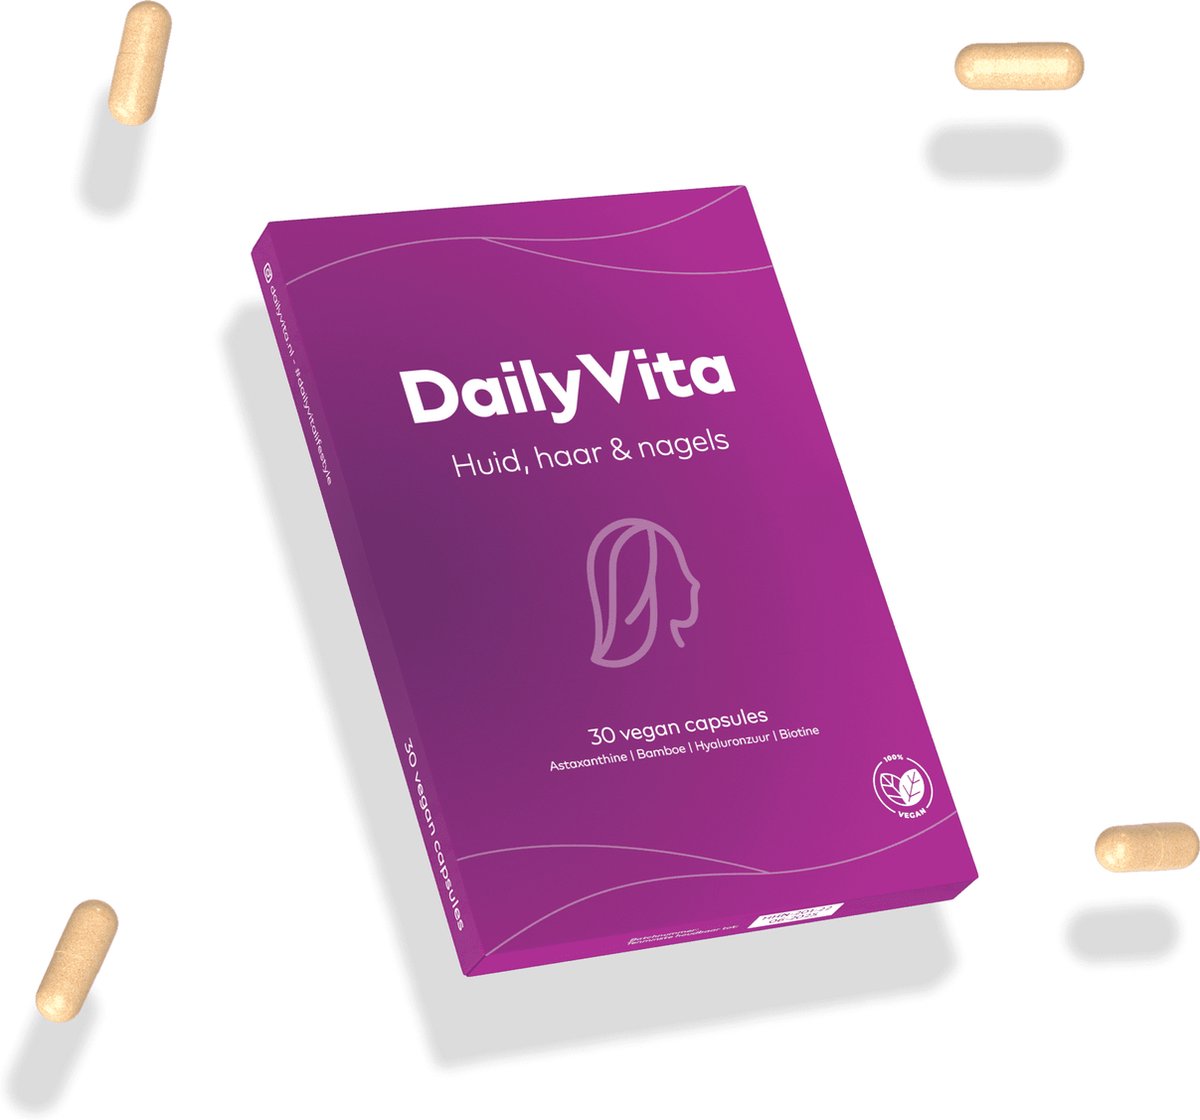 DailyVita - Huid, haar & nagels - 30 vegan capsules - met Hyaluronzuur, Biotine, Bamboe extract en Astaxanthine